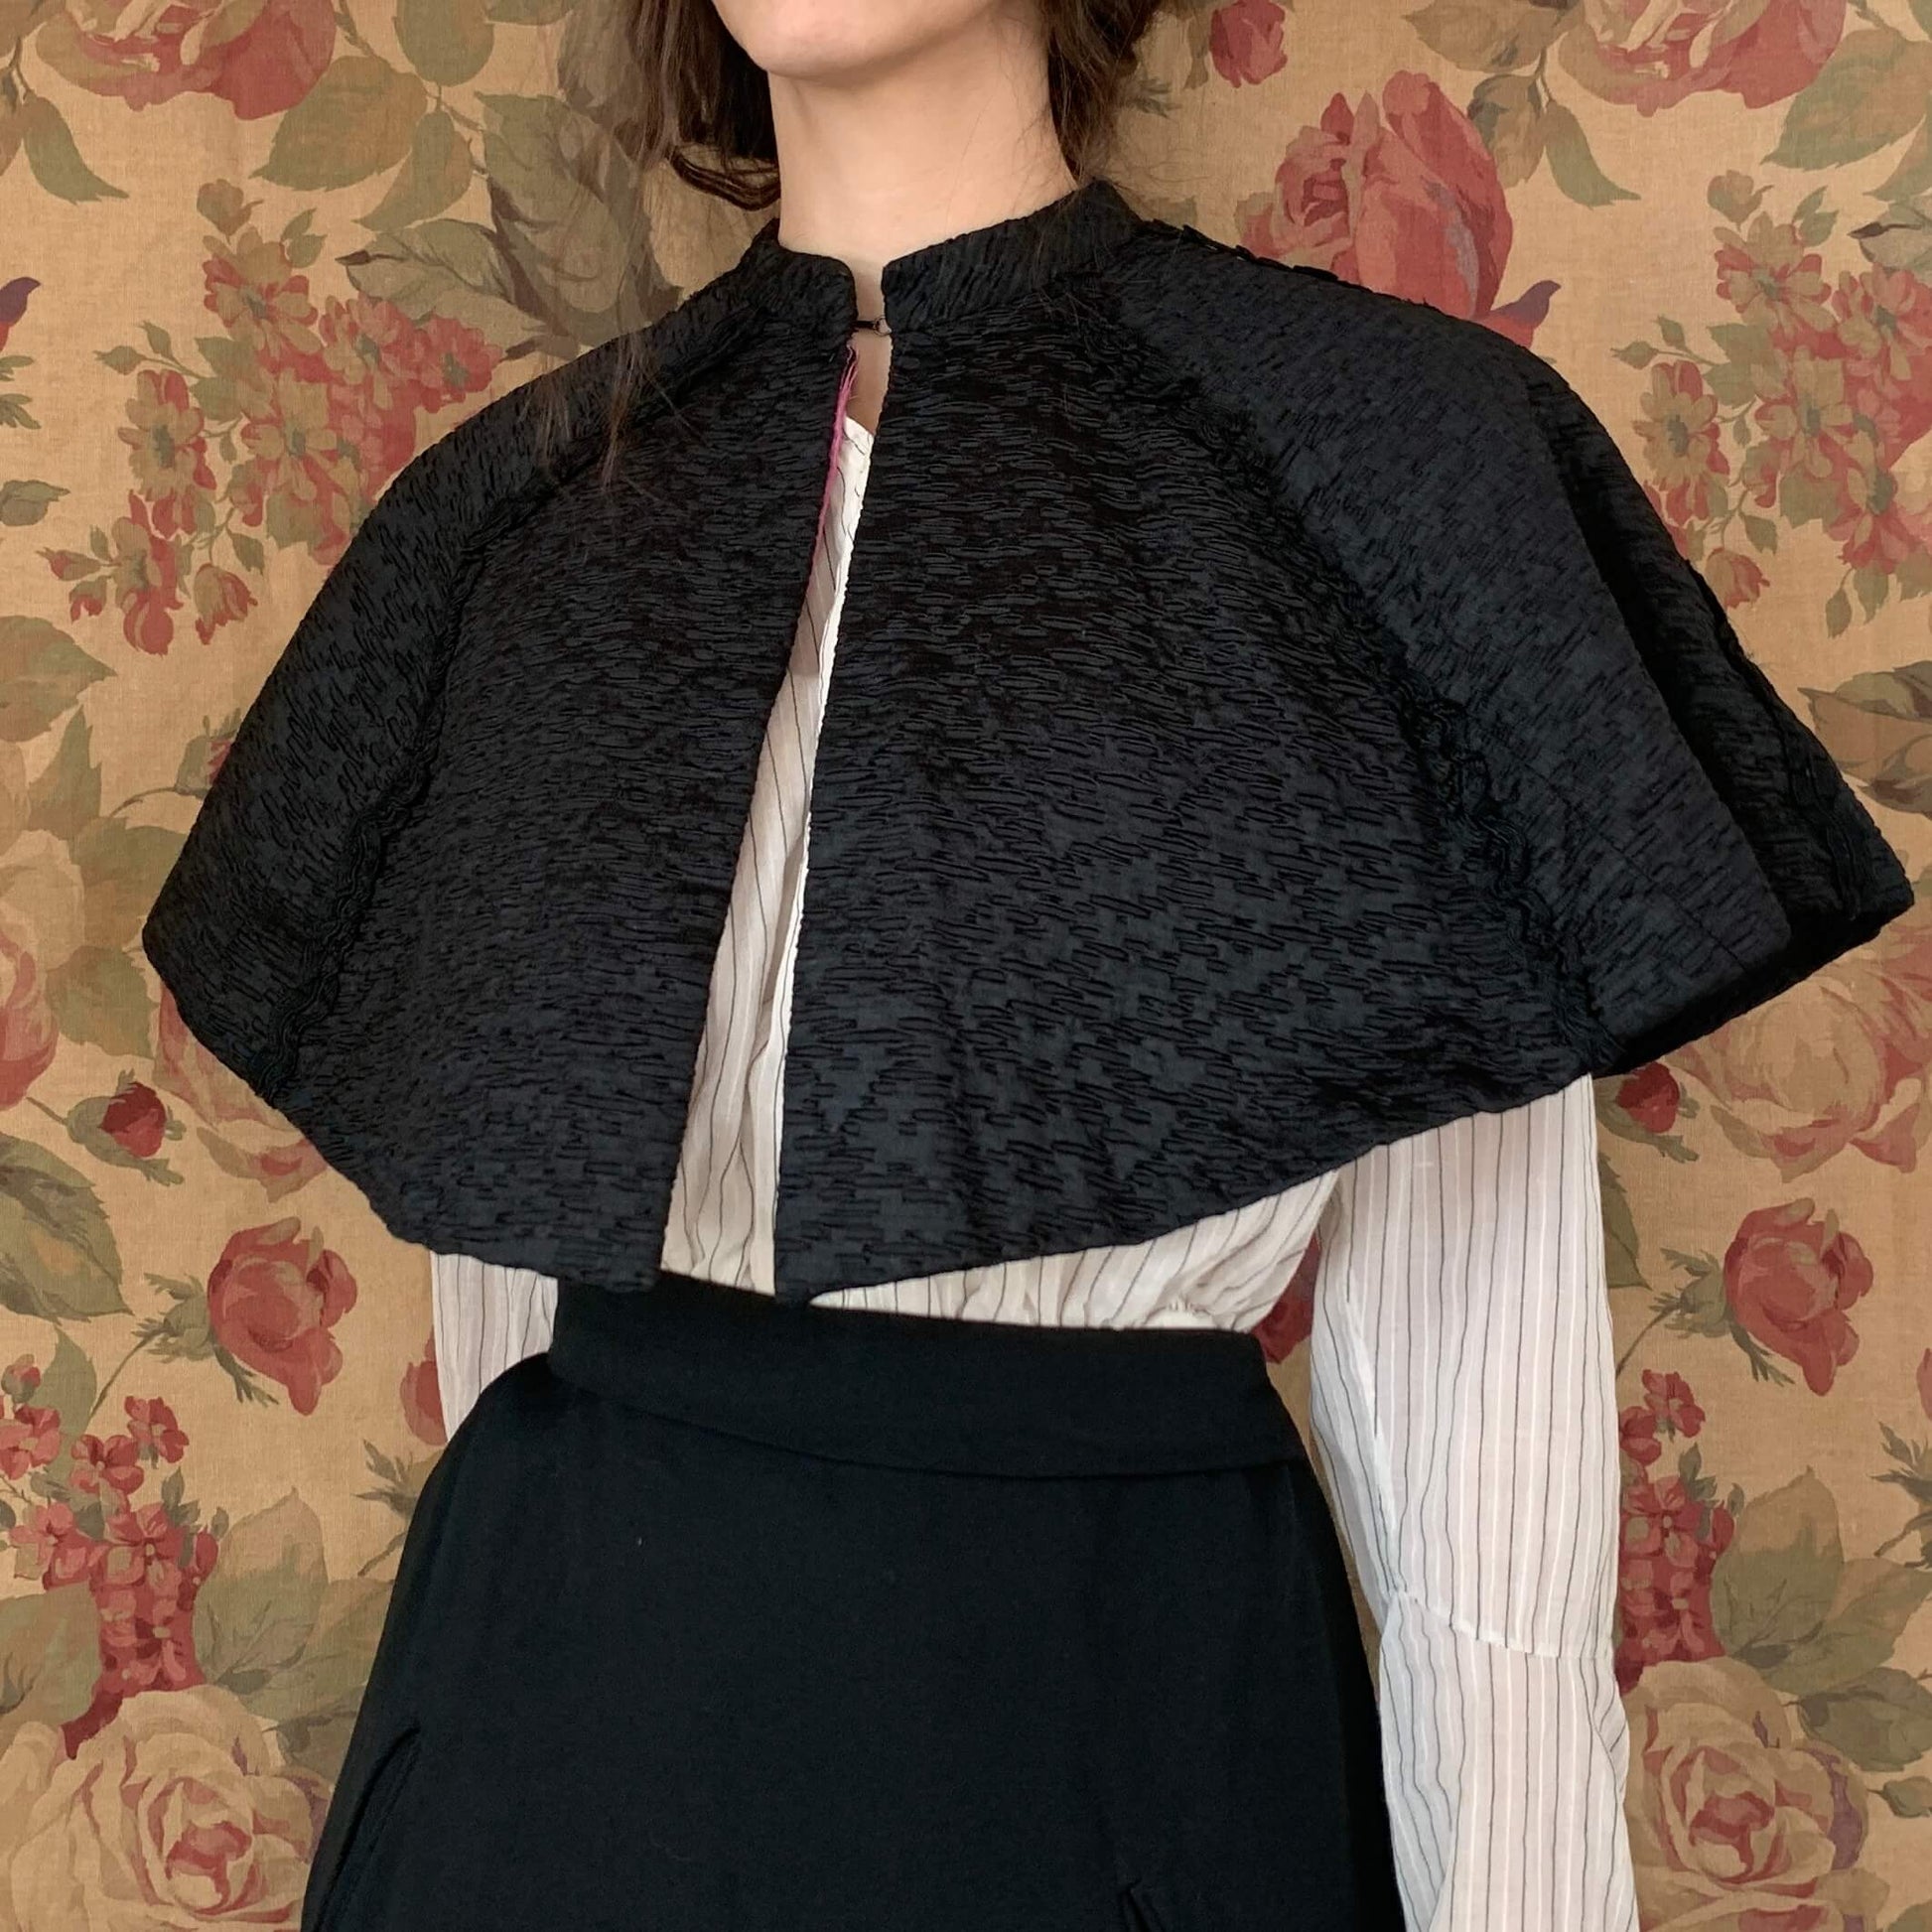 Black Victorian shoulder cape